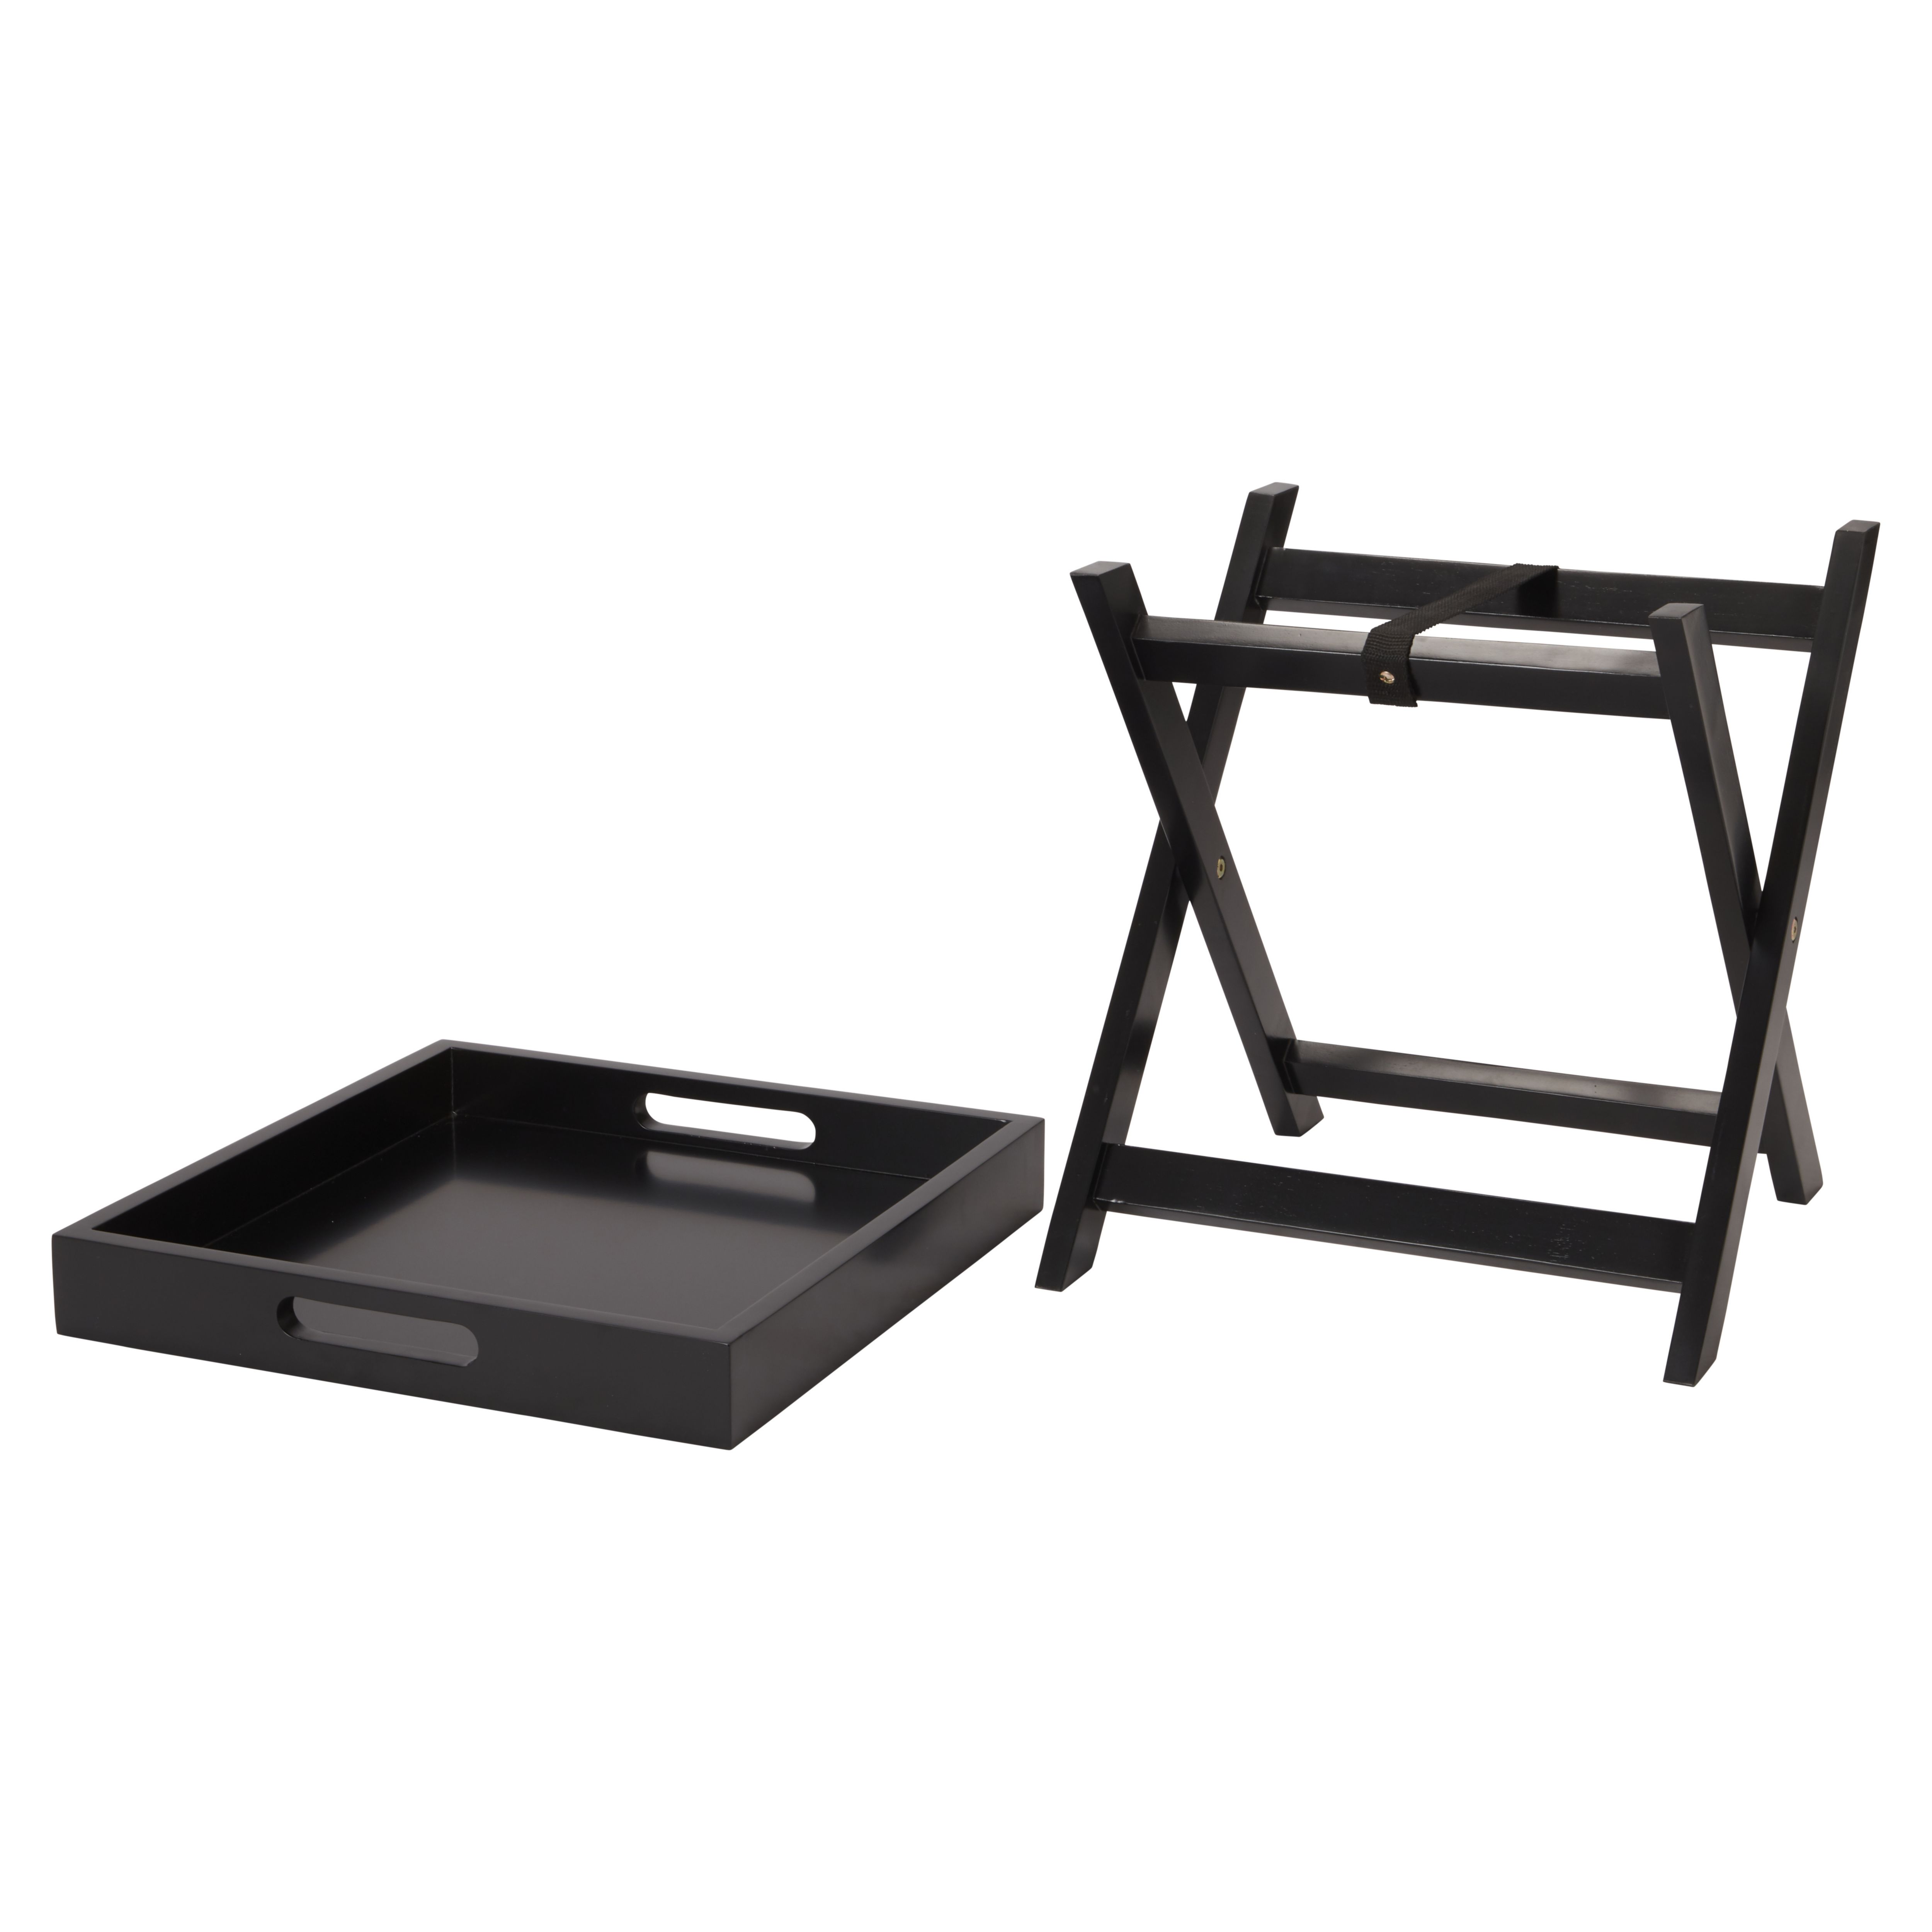 Matt black Tray table (H)44cm (W)40cm (D)40cm